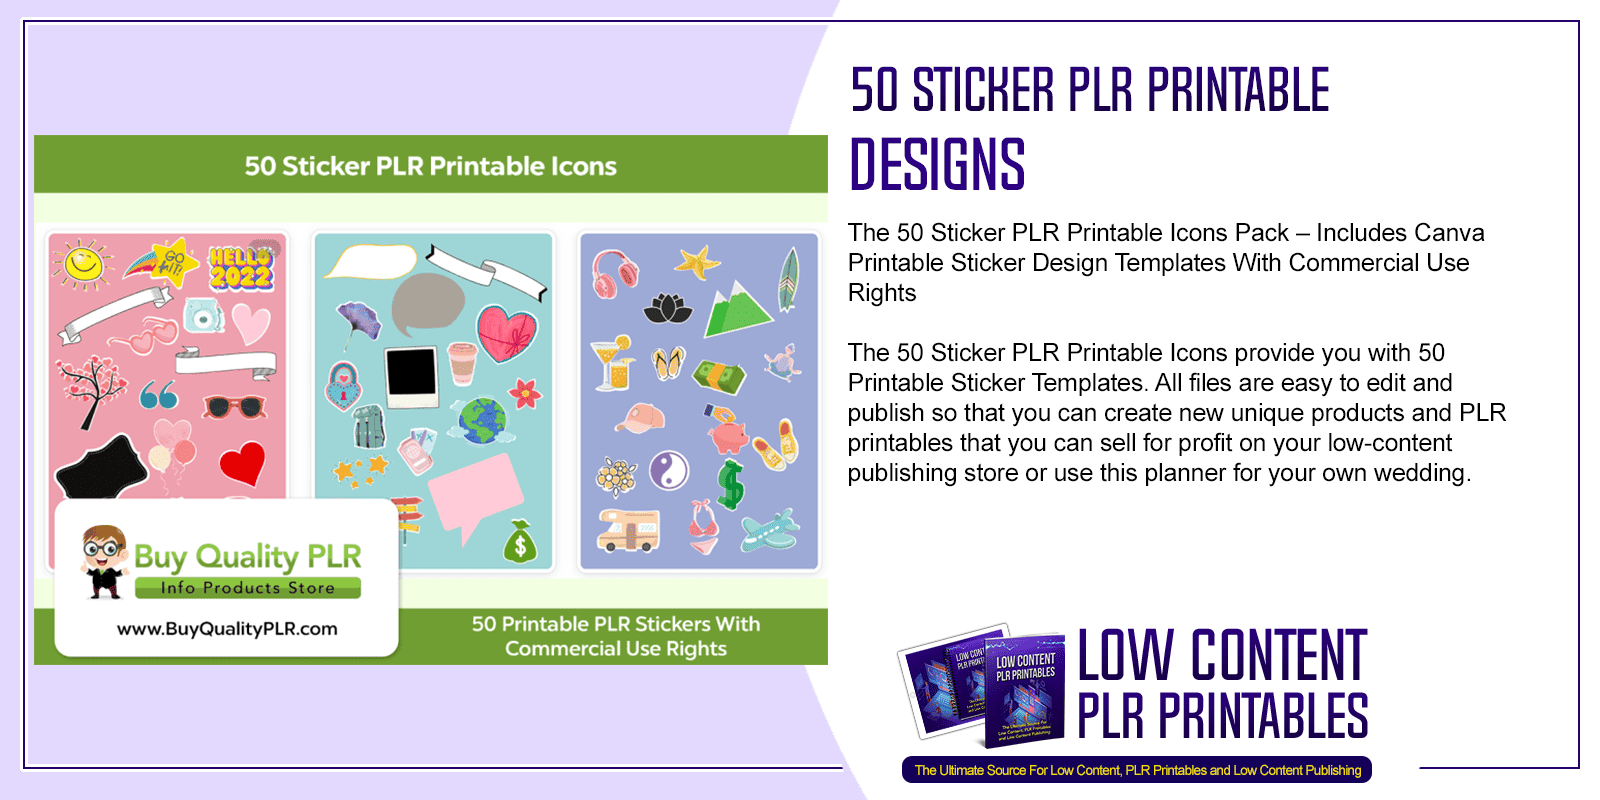 50 Sticker PLR Printable Designs